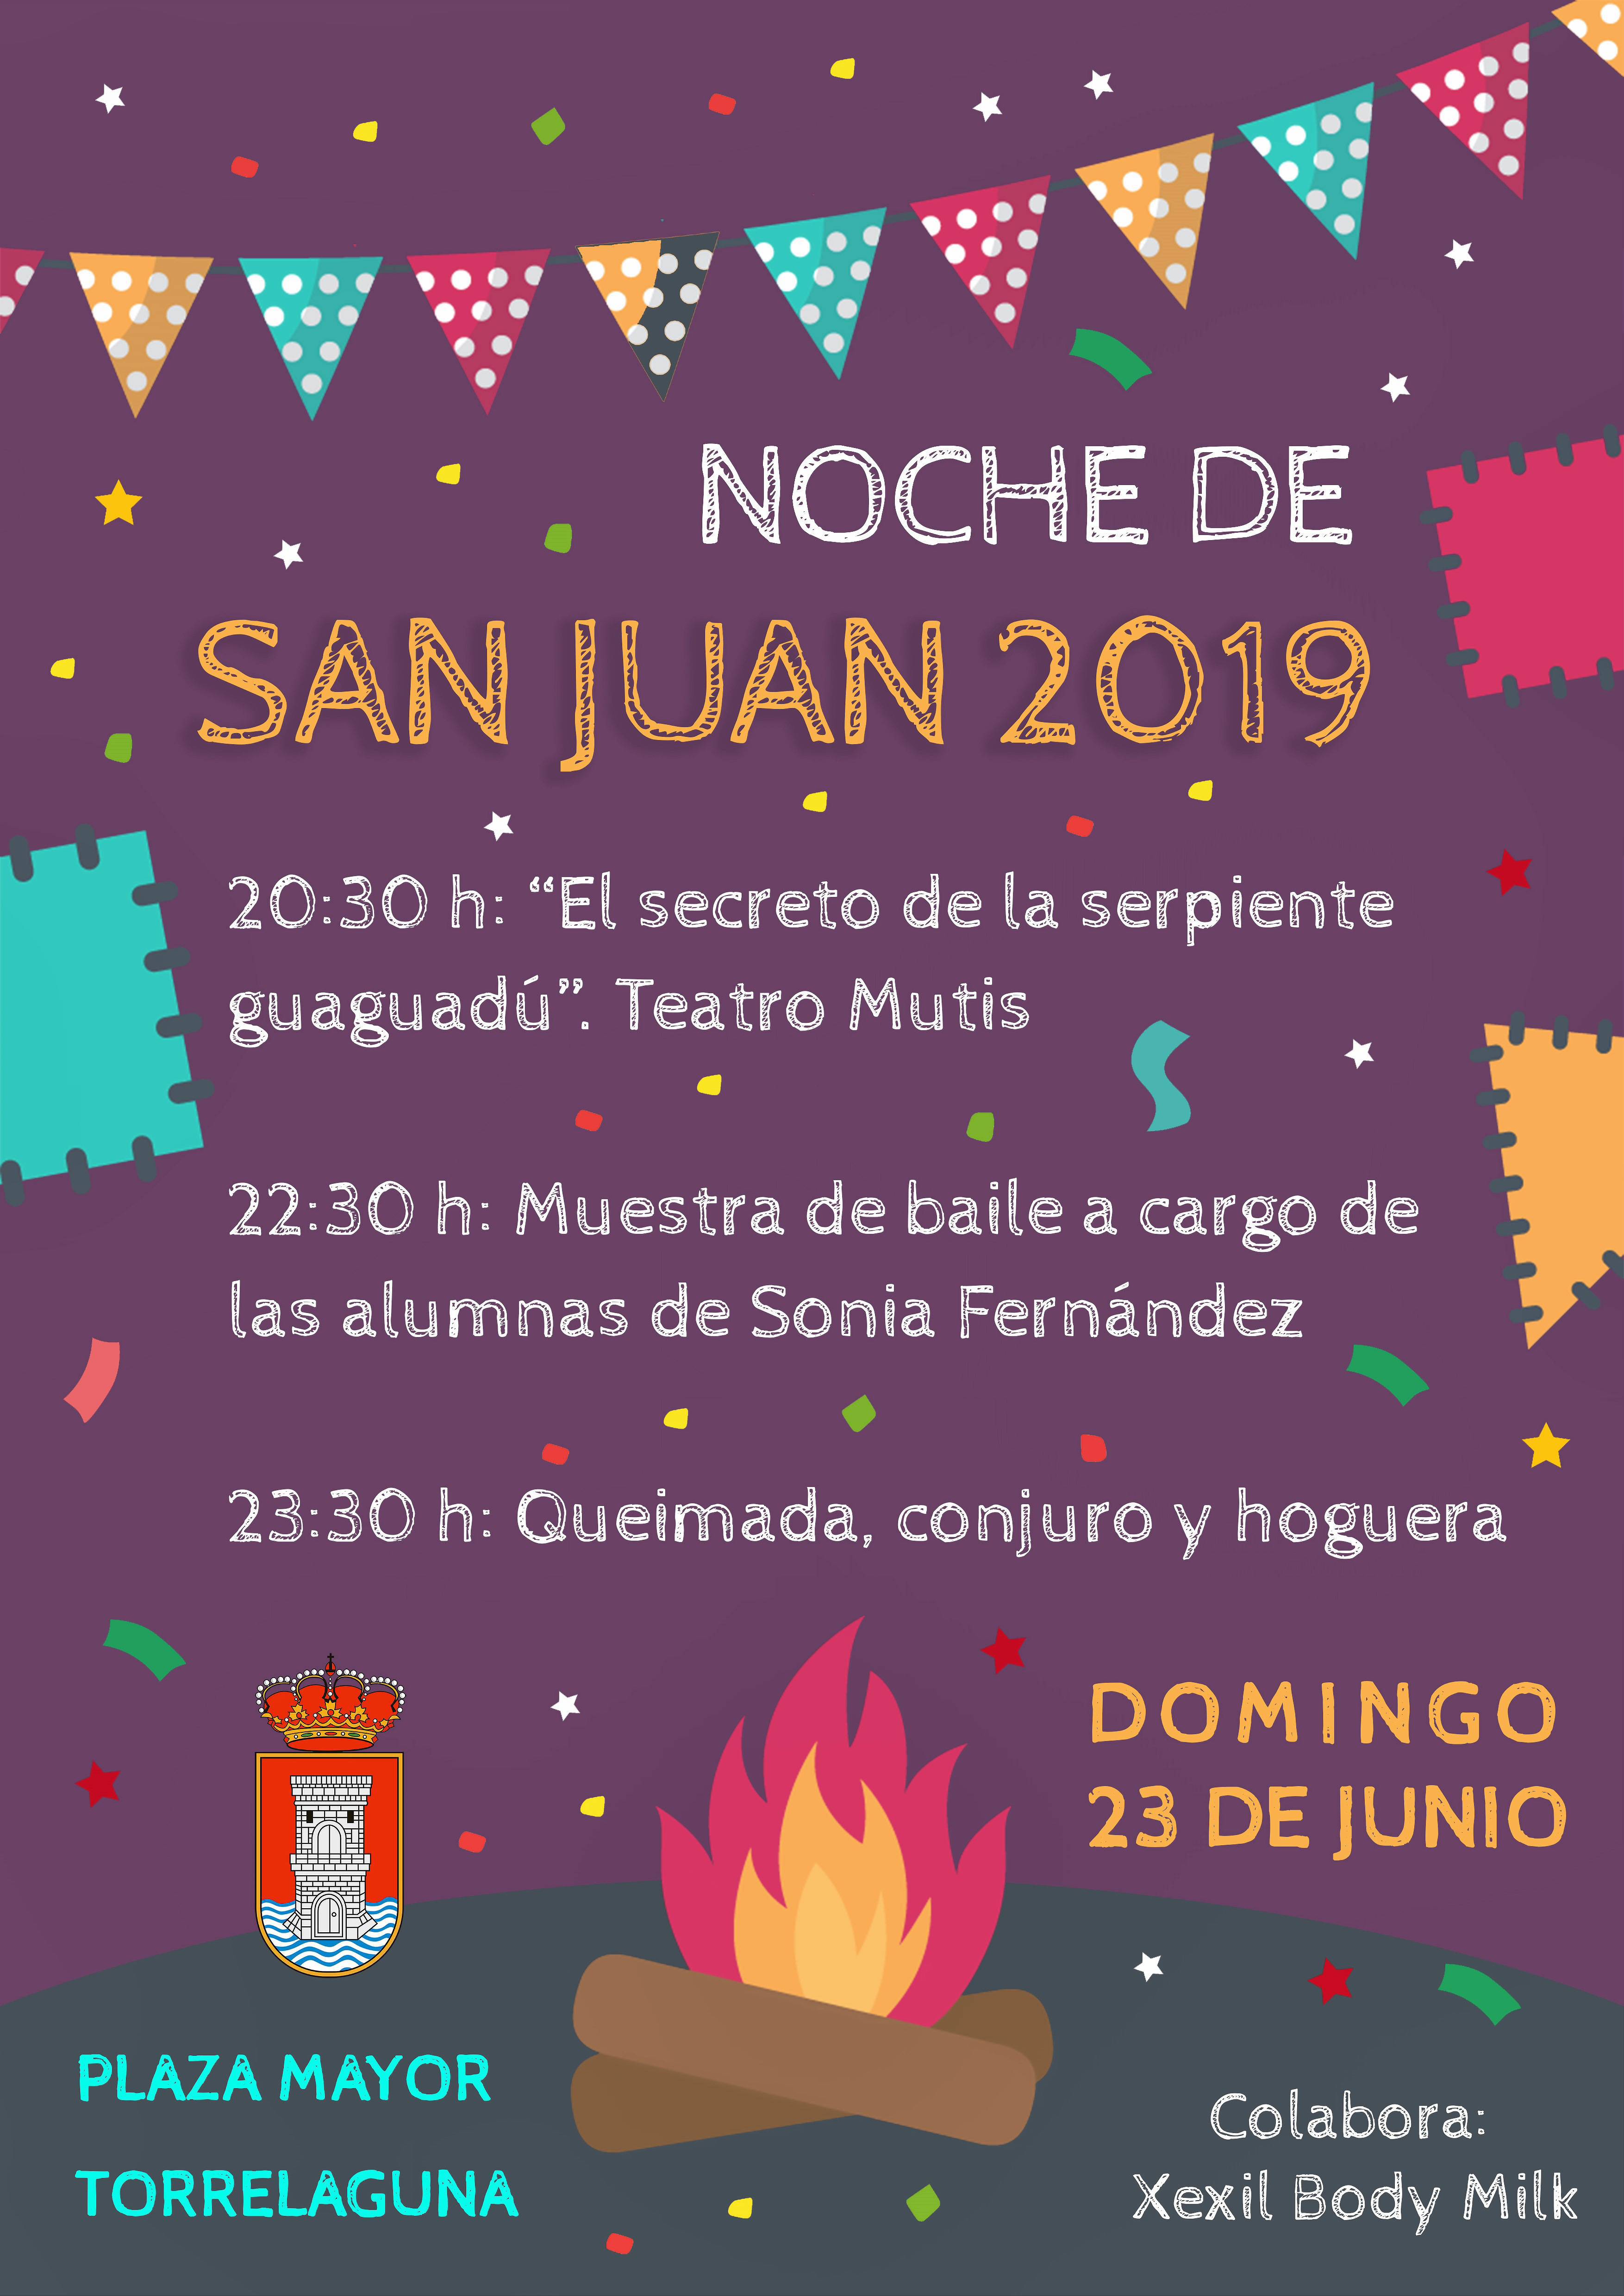 pollo Hora los Noche de San Juan Torrelaguna 2019 | Ayuntamiento de Torrelaguna